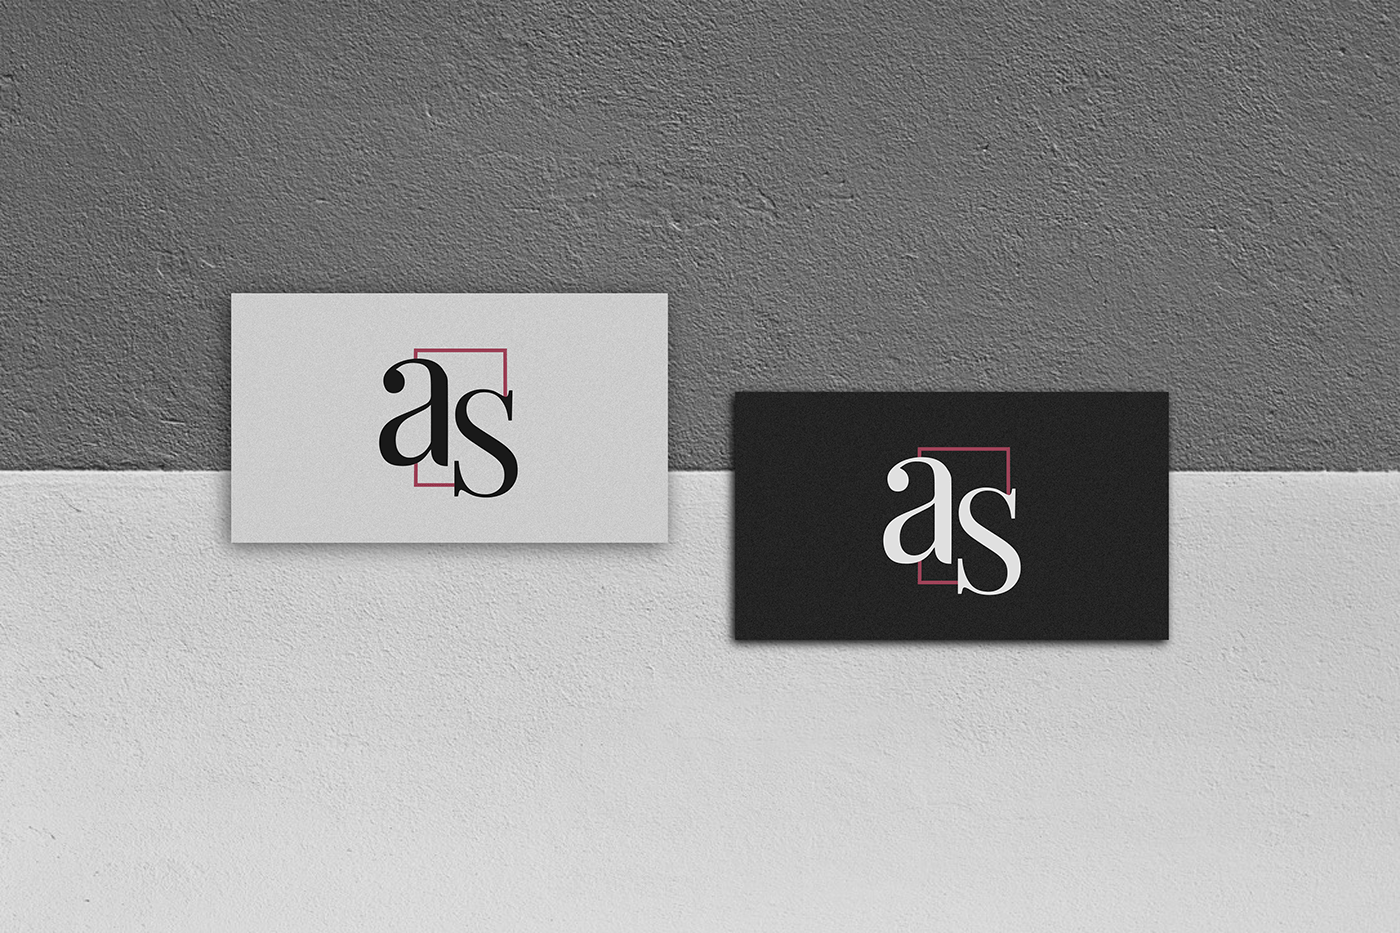 aesthetic Ayushi singhal black white branding  business business card business card mockup card minimal mock ups